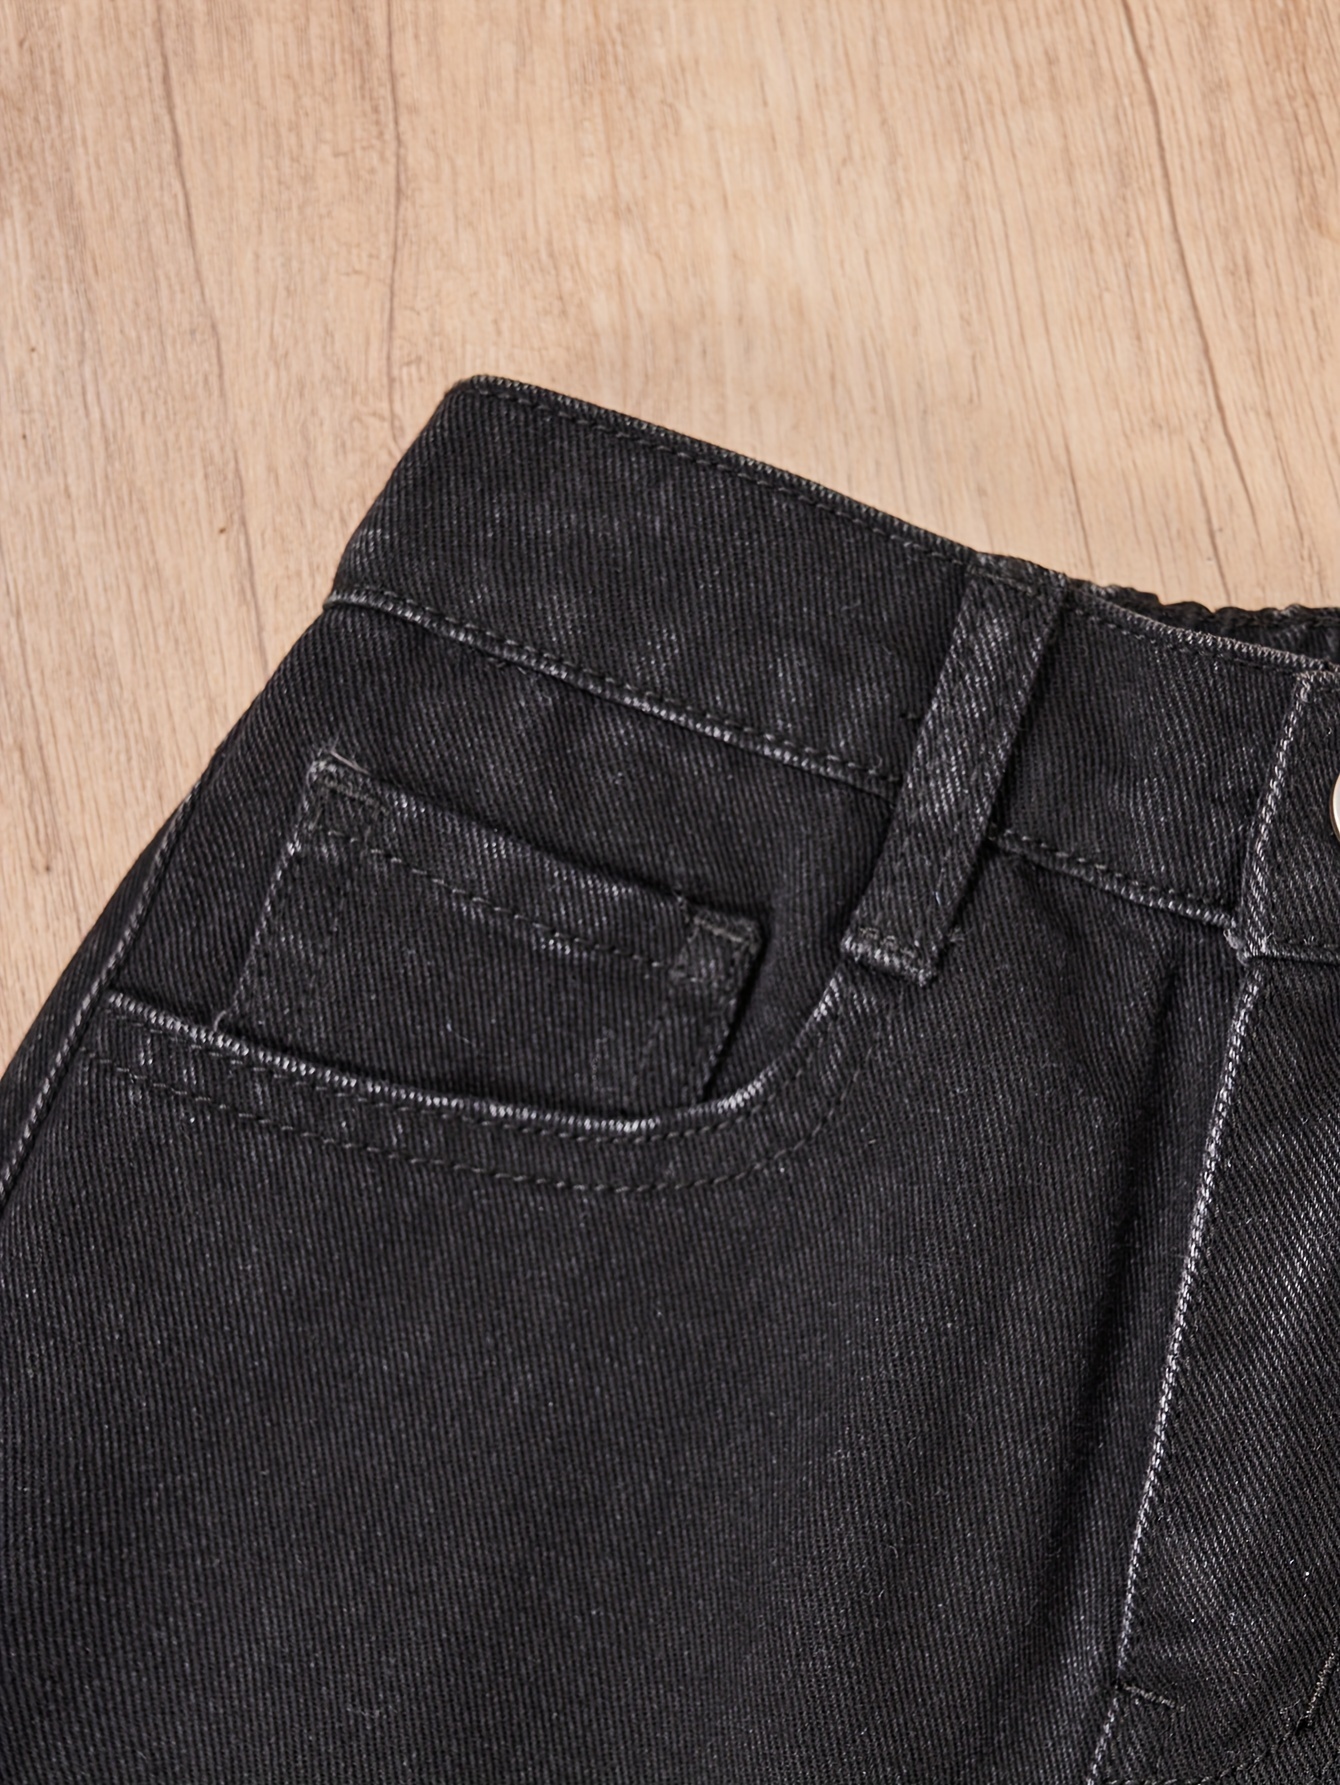 Kids Children Loose Straight Jeans For Big Girls School Denim Wide